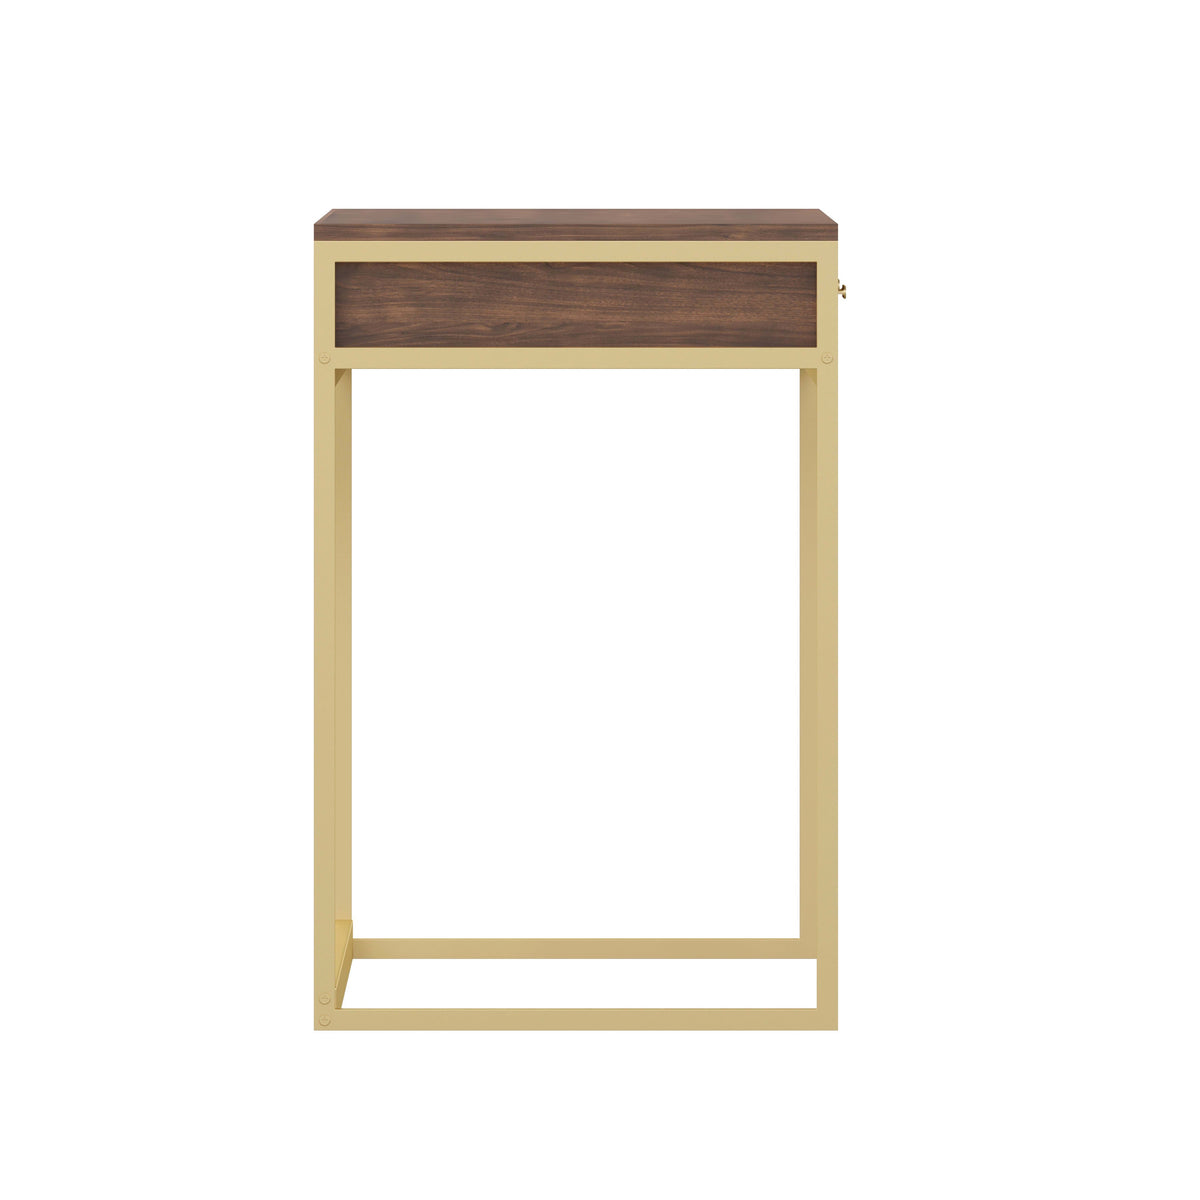 Walnut Top/Polished Brass Frame |#| Walnut 3 Drawer Home Office Desk with Polished Brass Metal Frame and Hardware